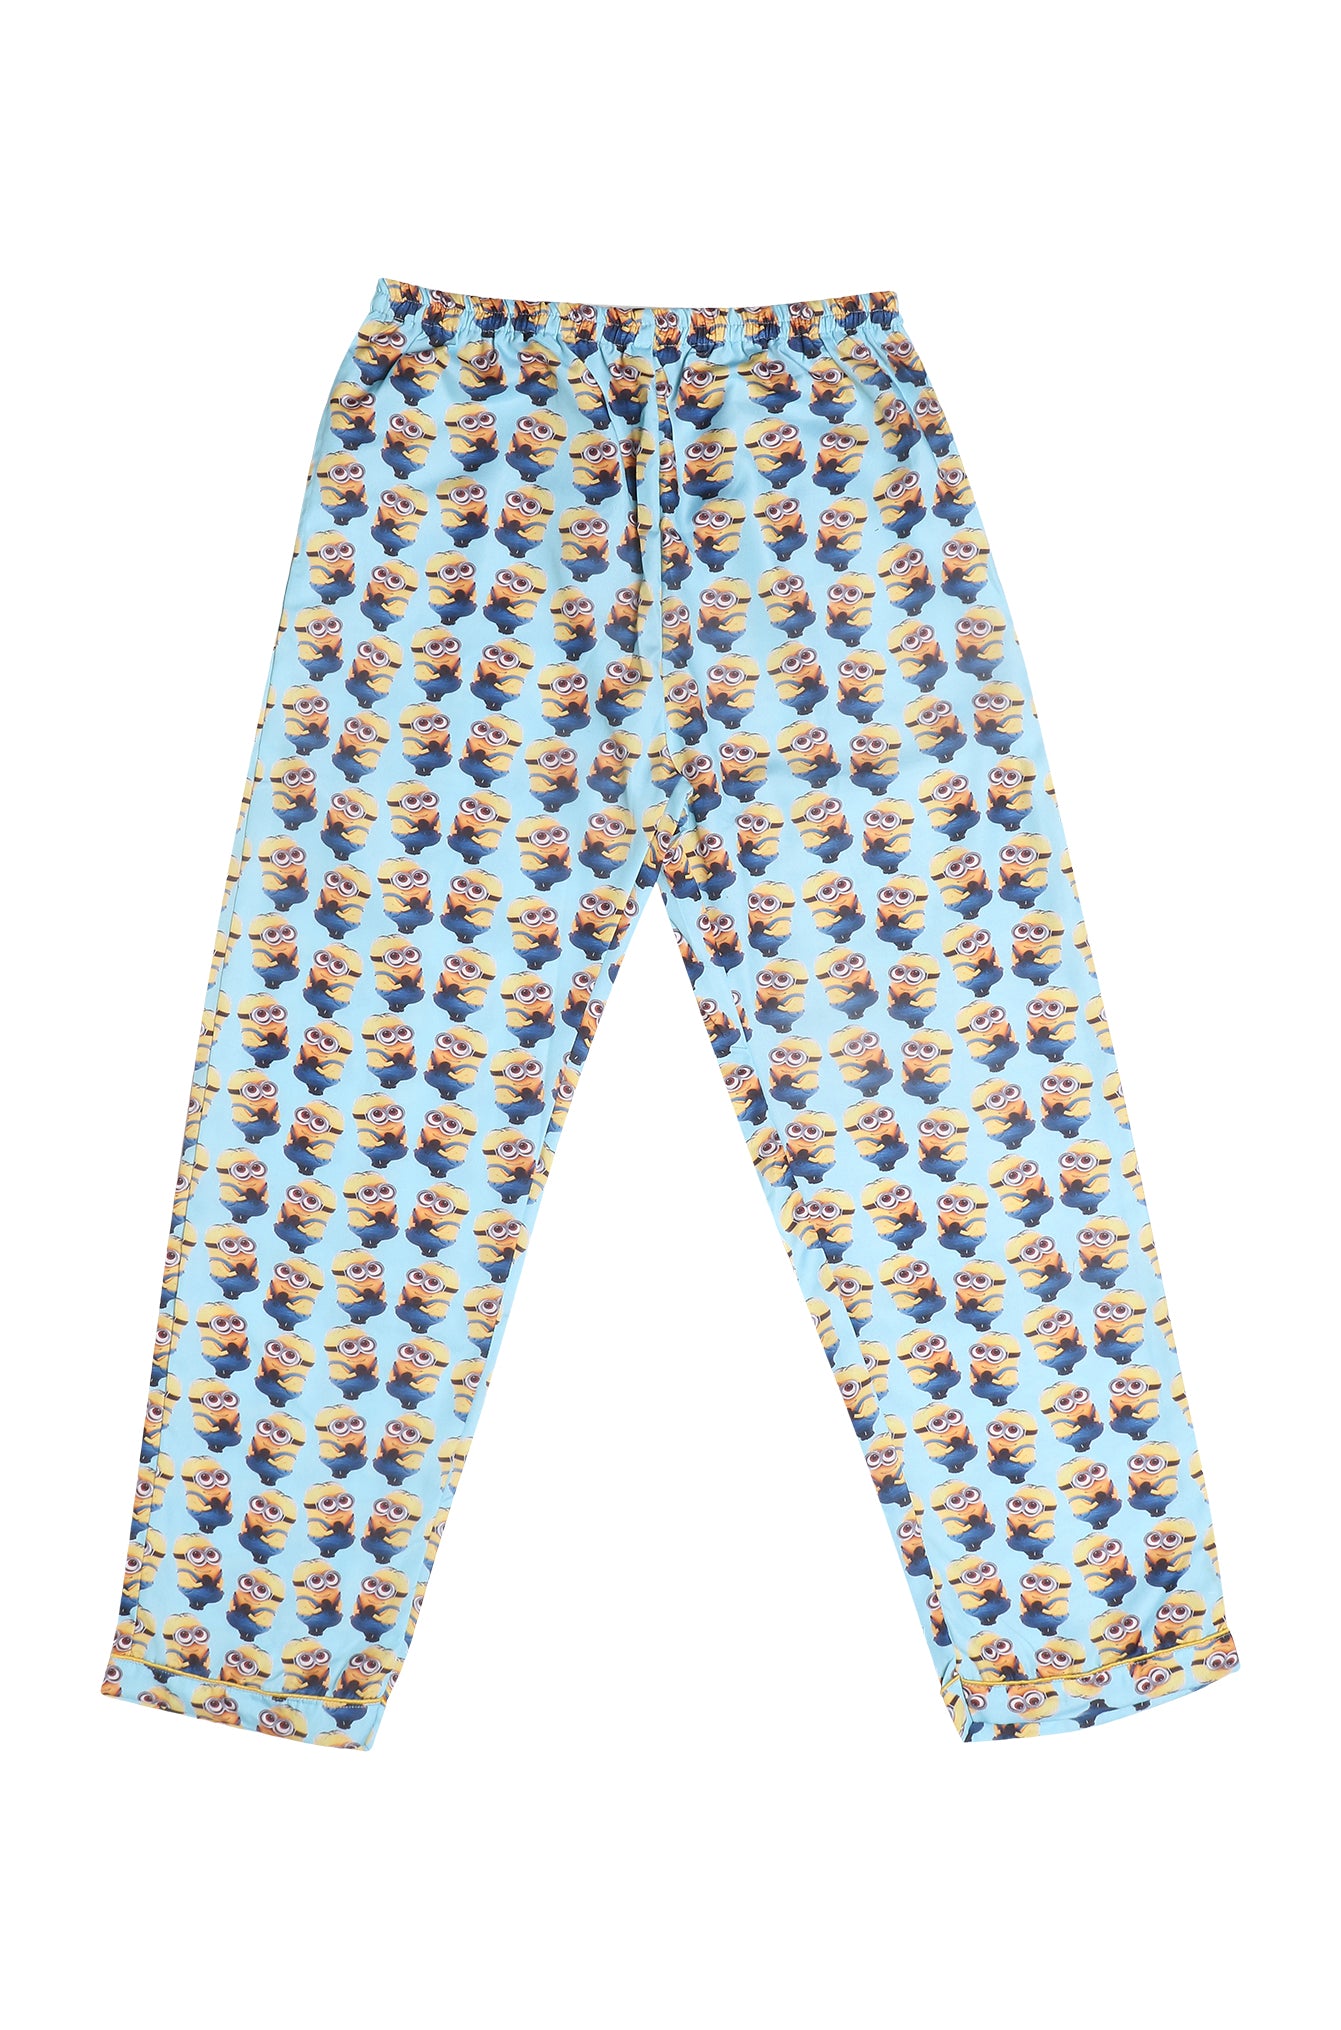 Single Pyjama (AU) [Buy 1 Get 1 Free]